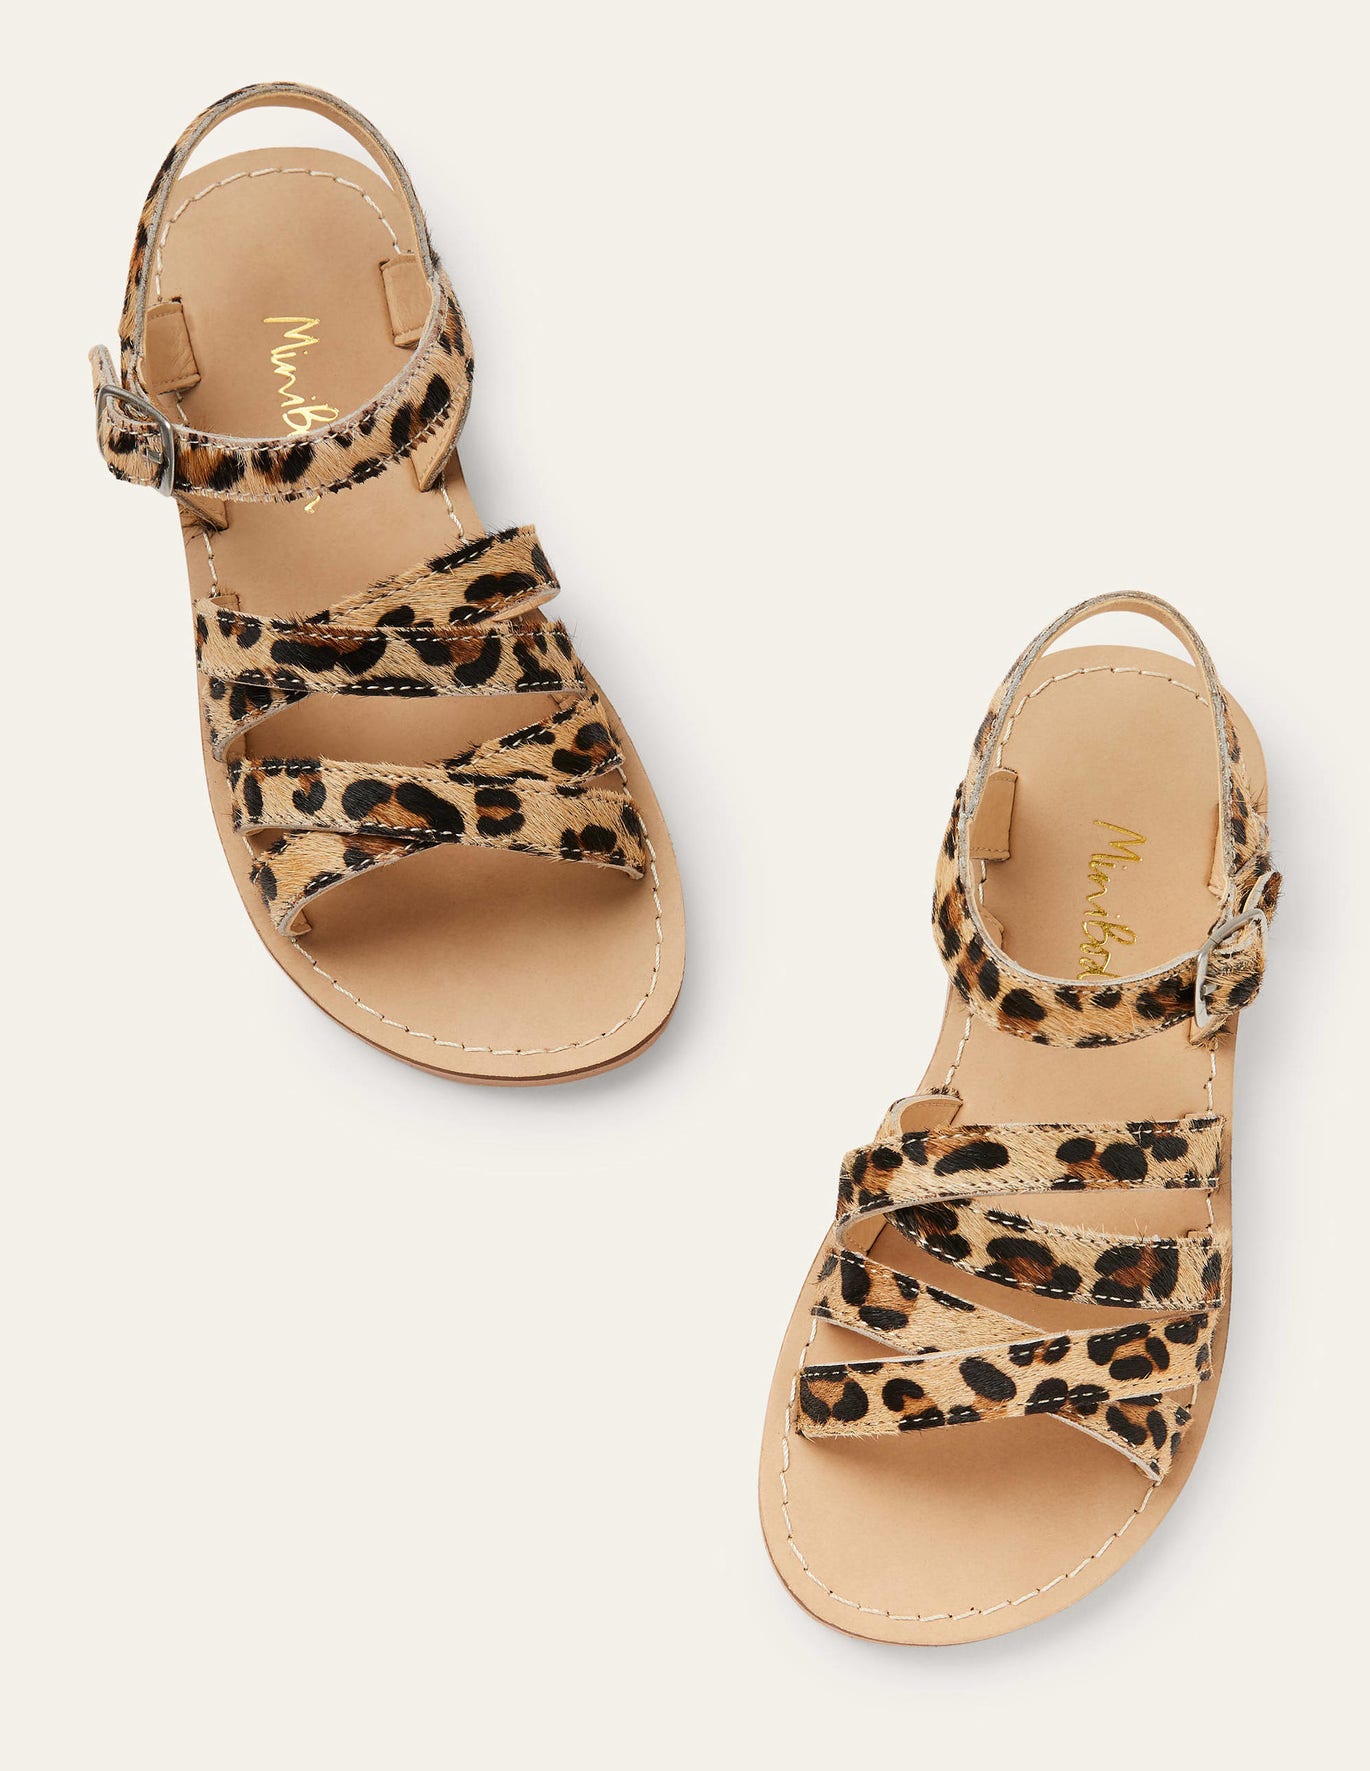 Boden Everyday Sandals - Leopard